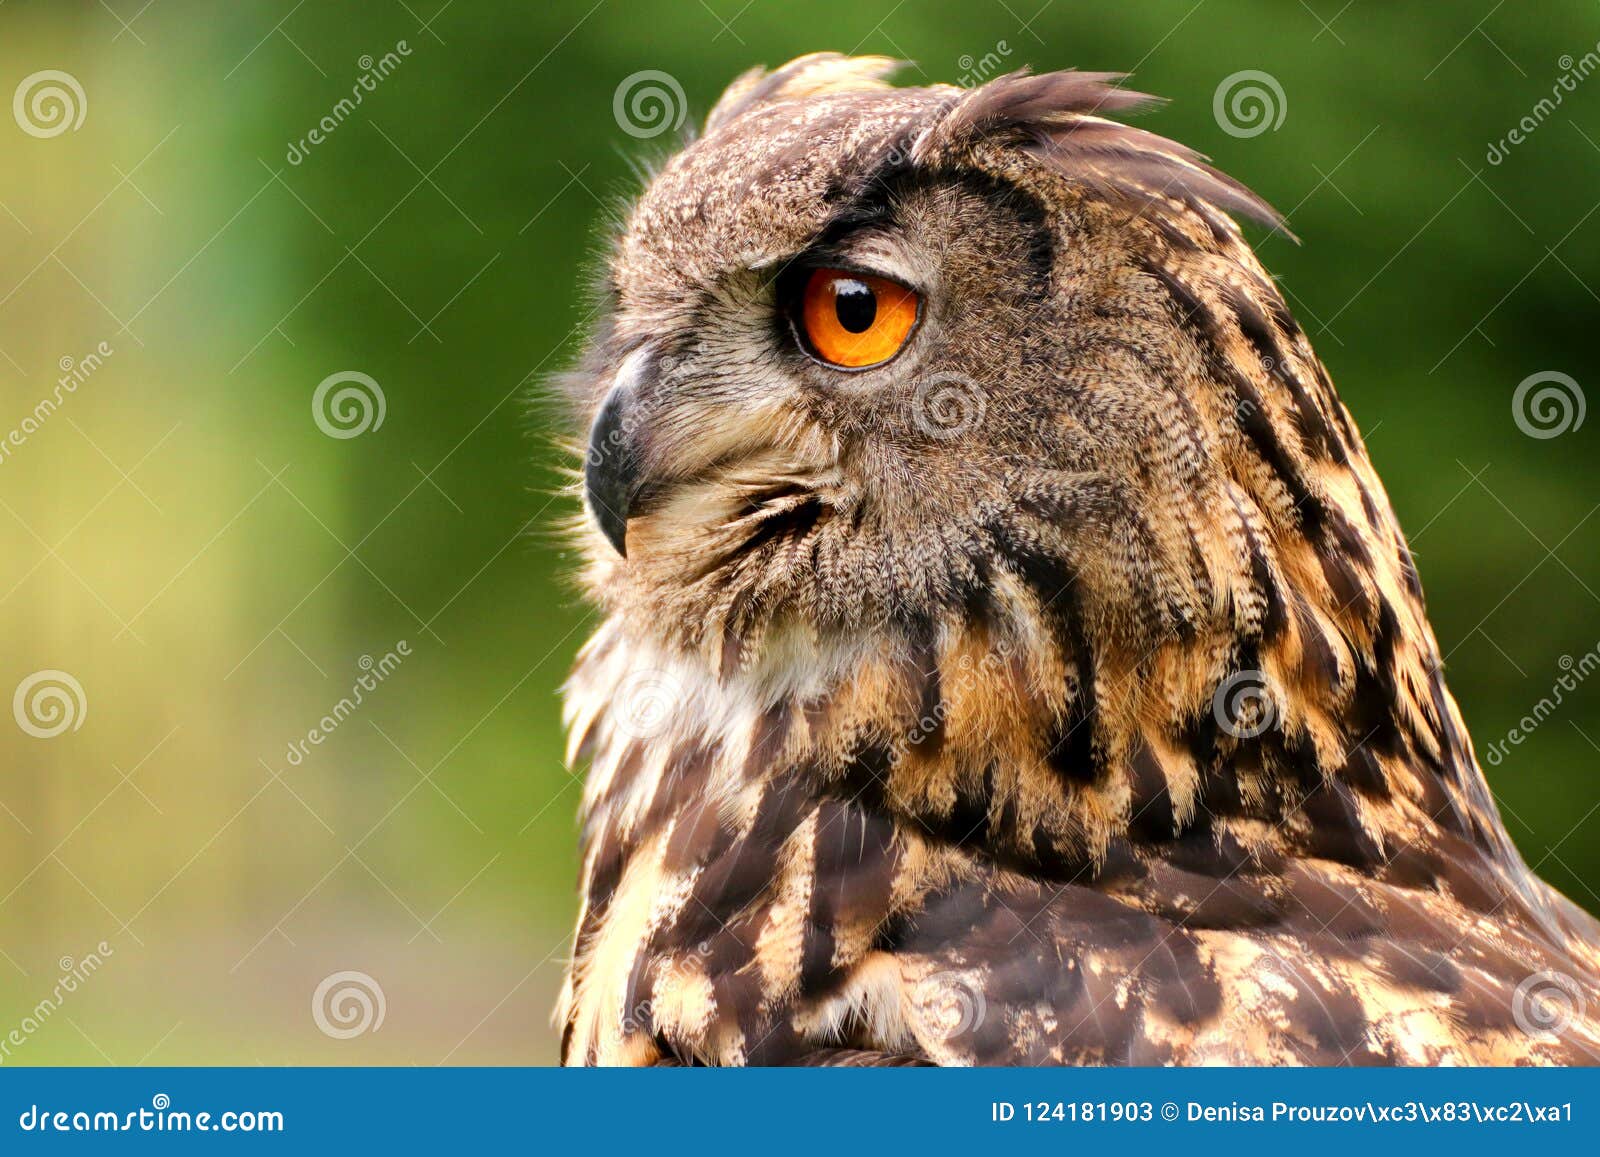 Profile portrait of owl stock image. Image of close - 124181903